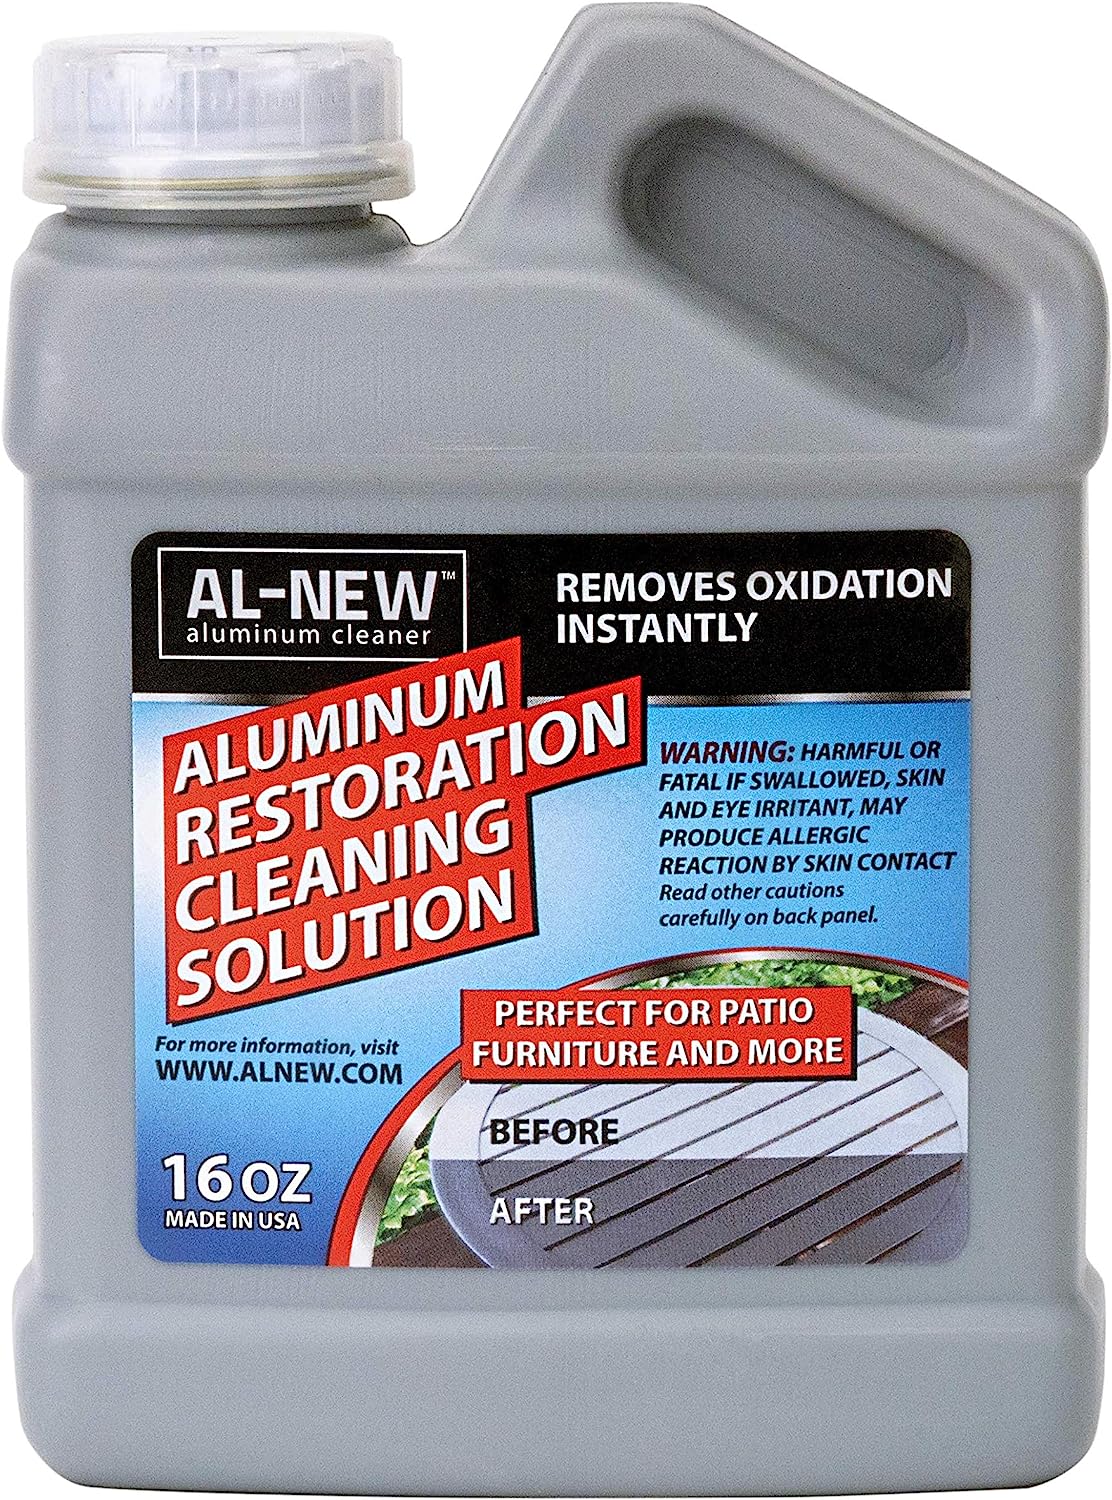 AL-NEW Aluminum Restoration Cleaning Solution | Clean [...]